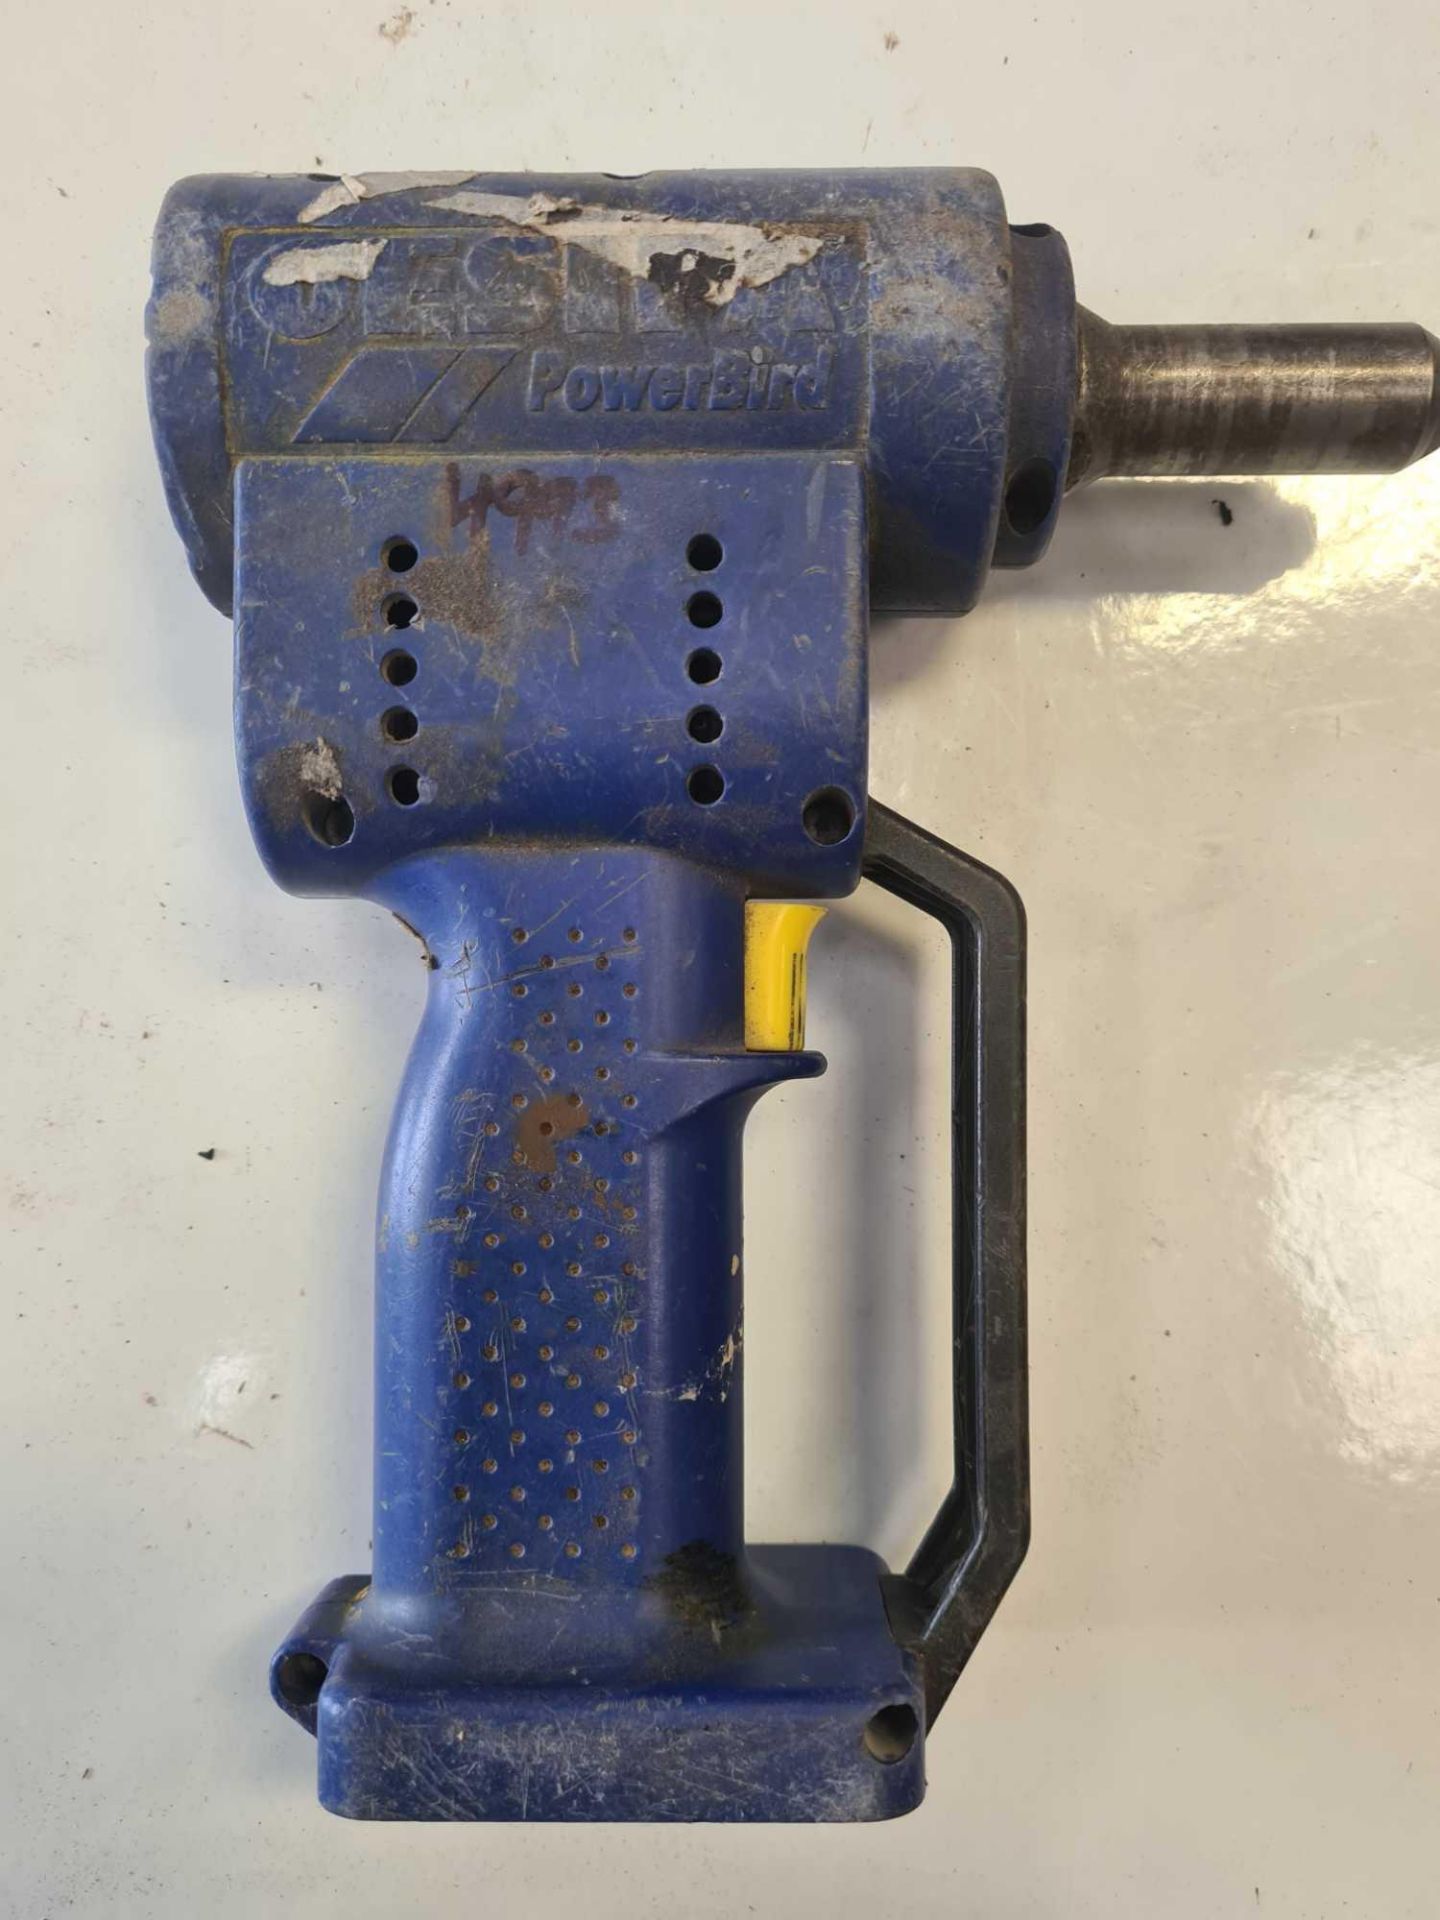 Gespia power bird rivet gun - Image 2 of 2